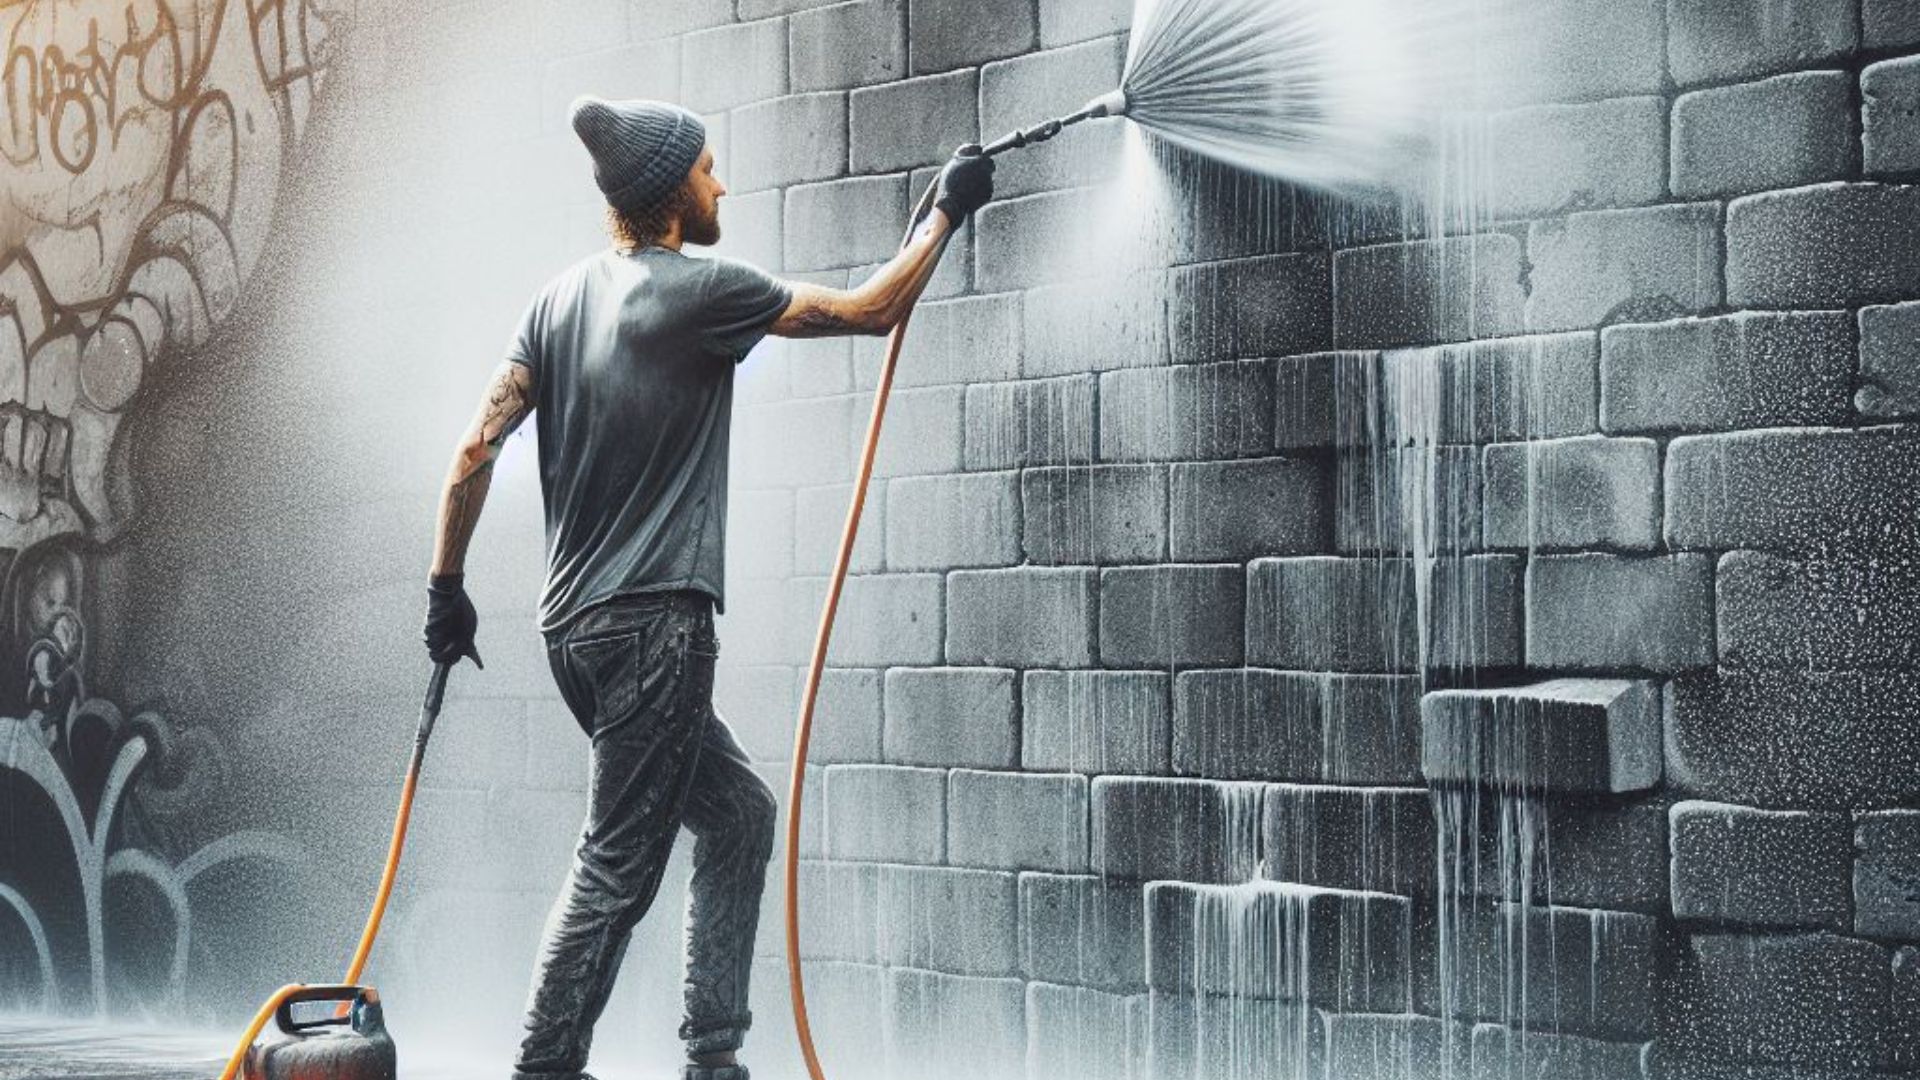 STREET ARTIST WASHING Cinder Wall WITH PRESSURE WASHER